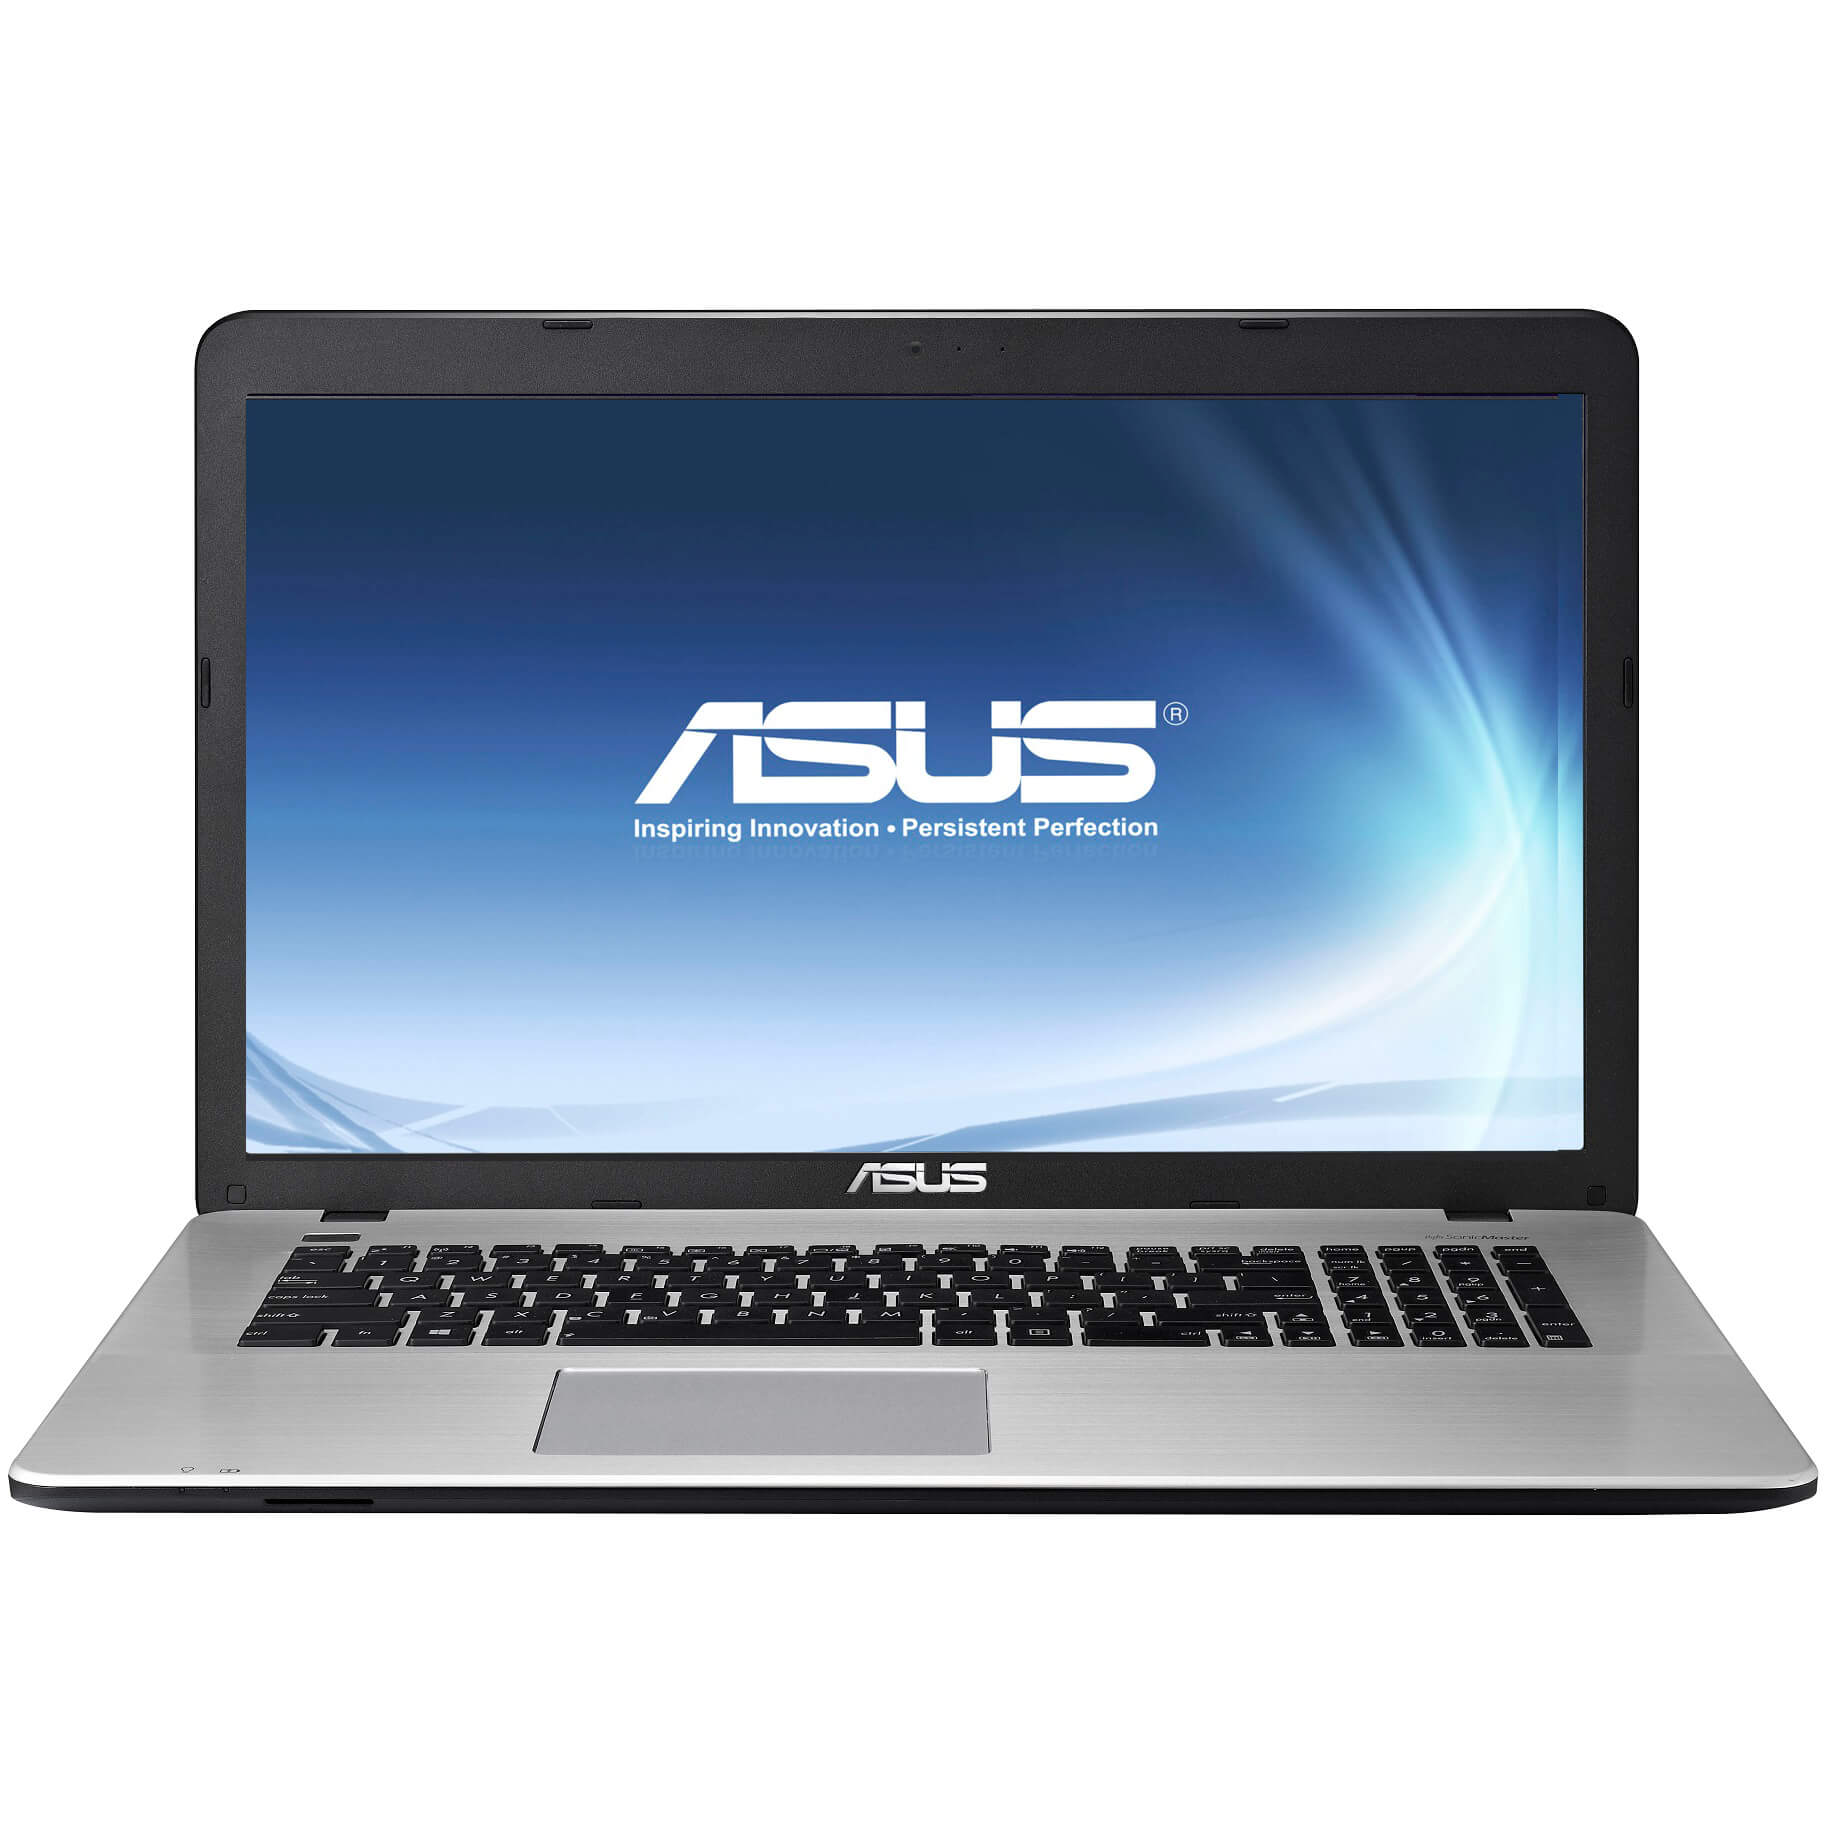  Laptop Asus X751LK-T4027D, Intel Core i7-4510U, 8GB DDR3, HDD 1TB + 24GB SSHD, nVidia GeForce GTX 850M 2GB, Free DOS 